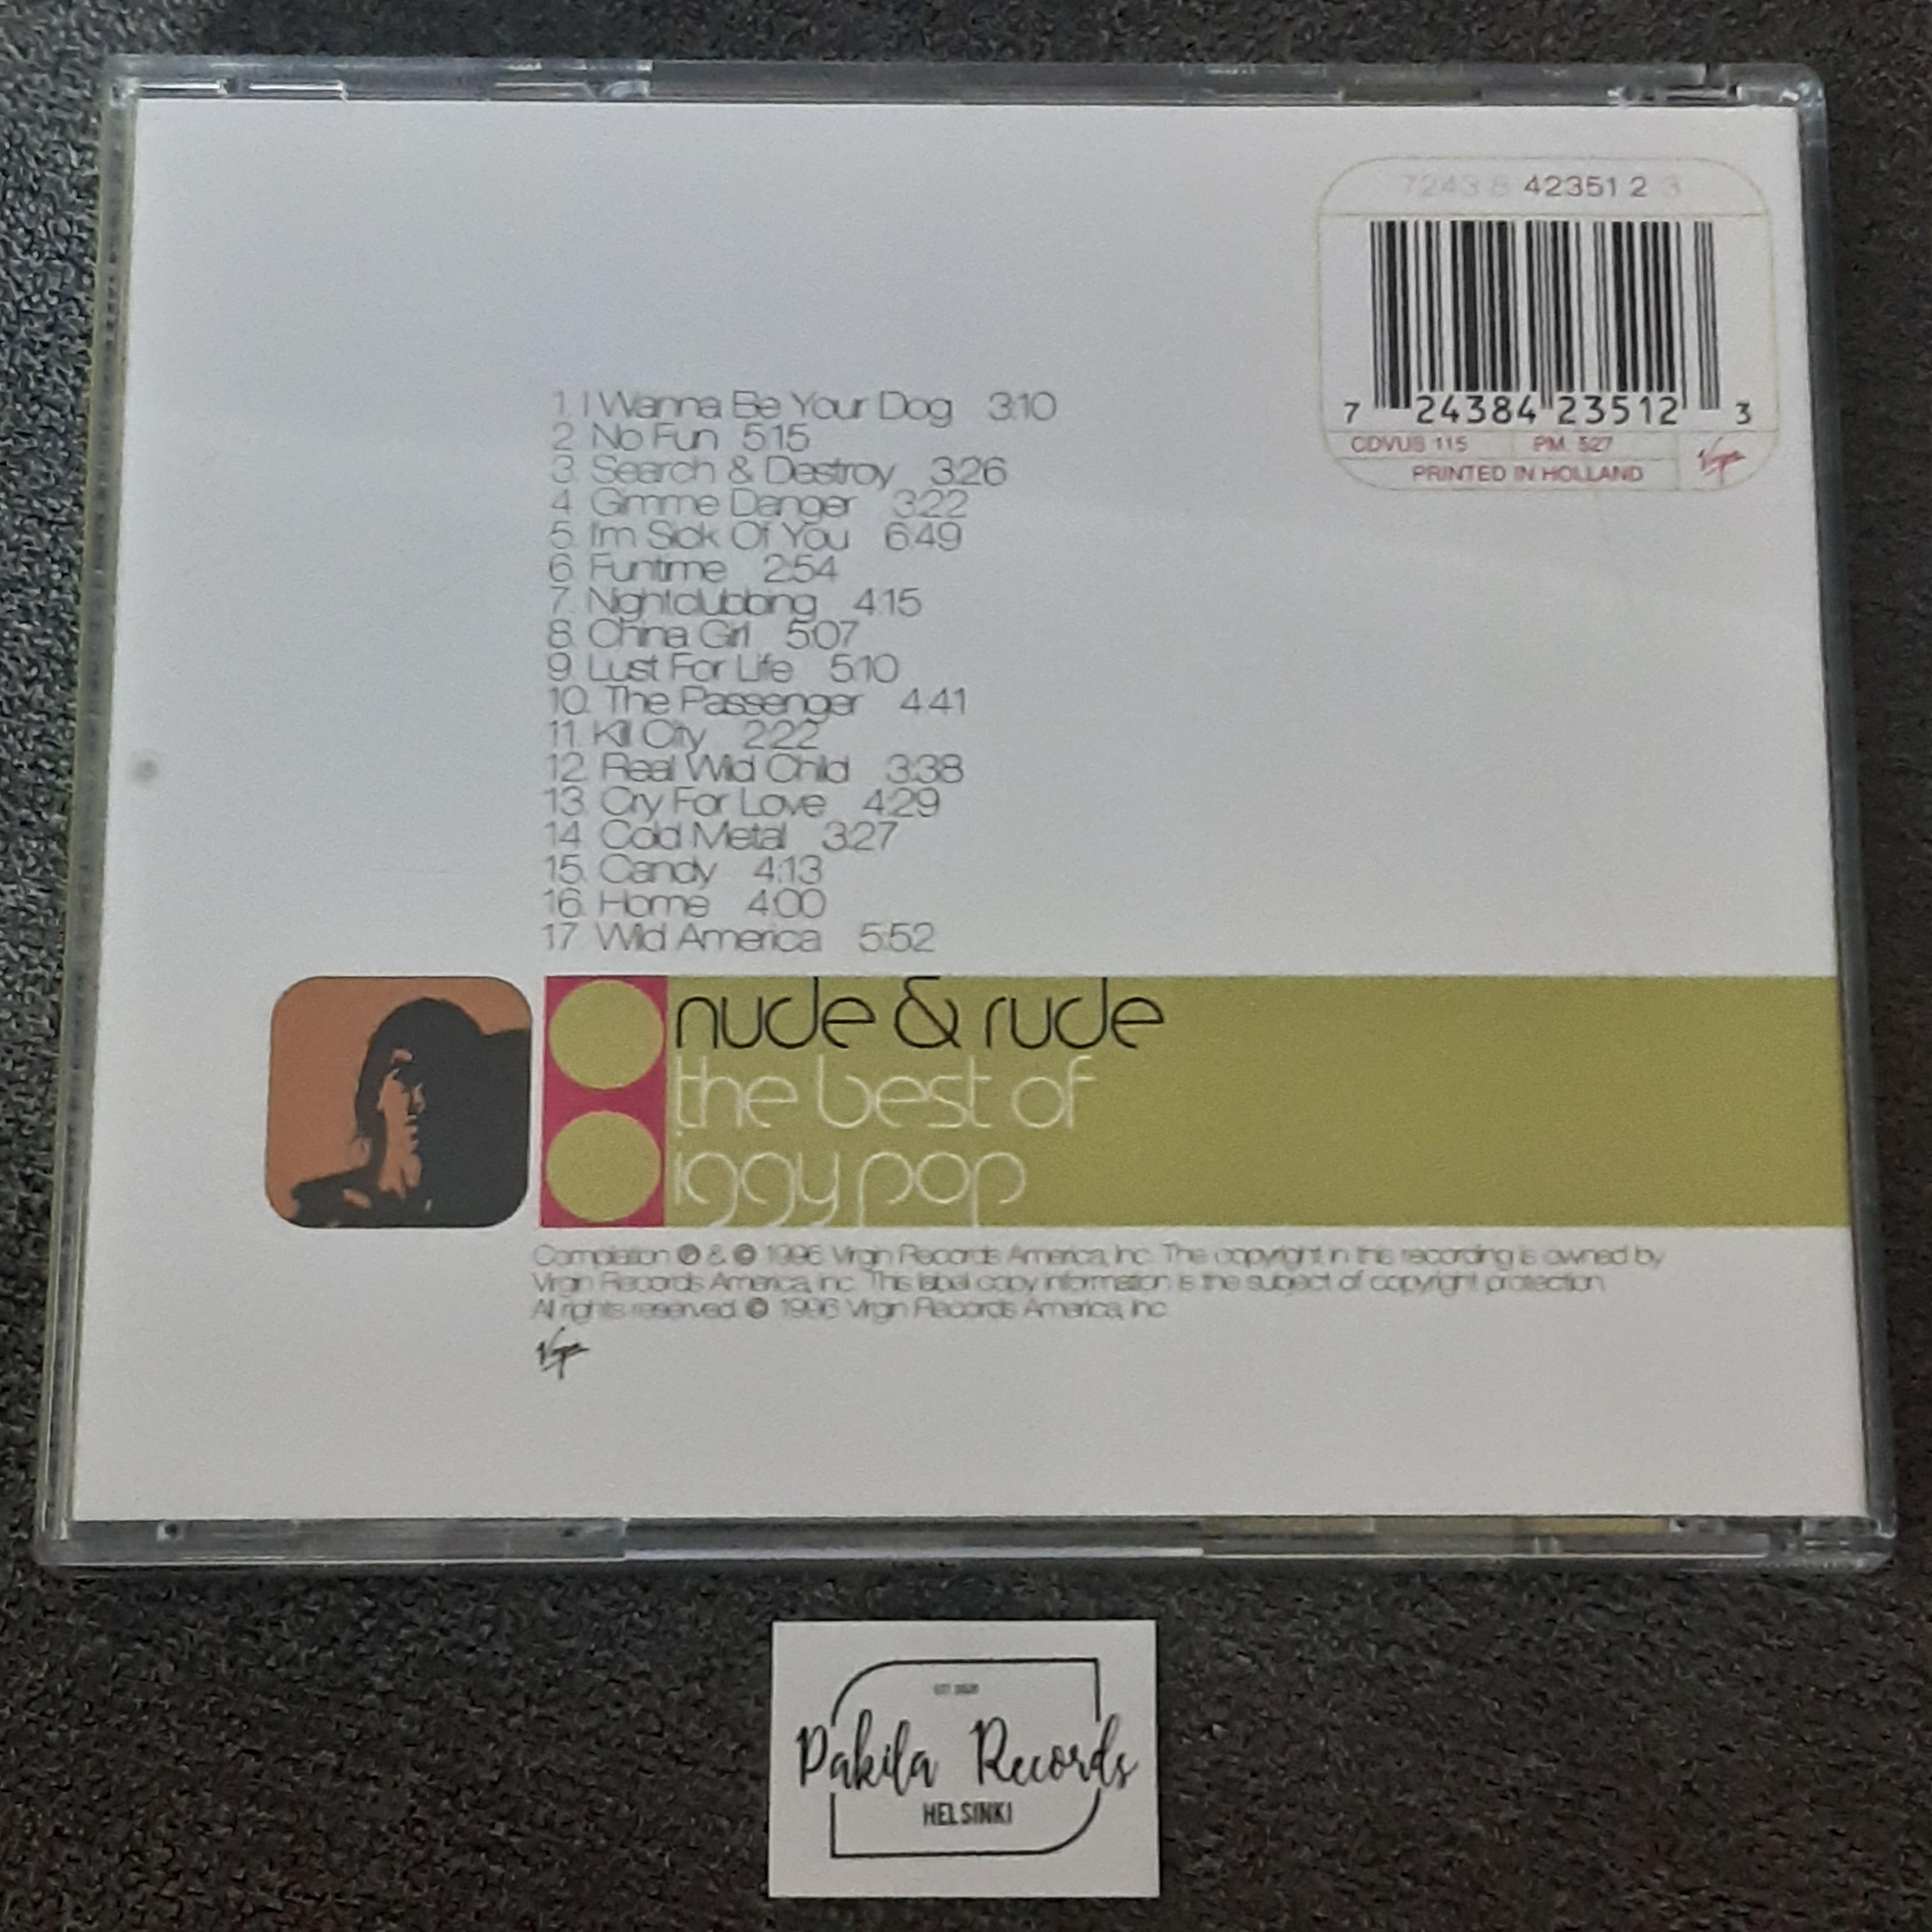 Iggy Pop - Nude & Rude, The Best Of Iggy Pop - CD (käytetty)